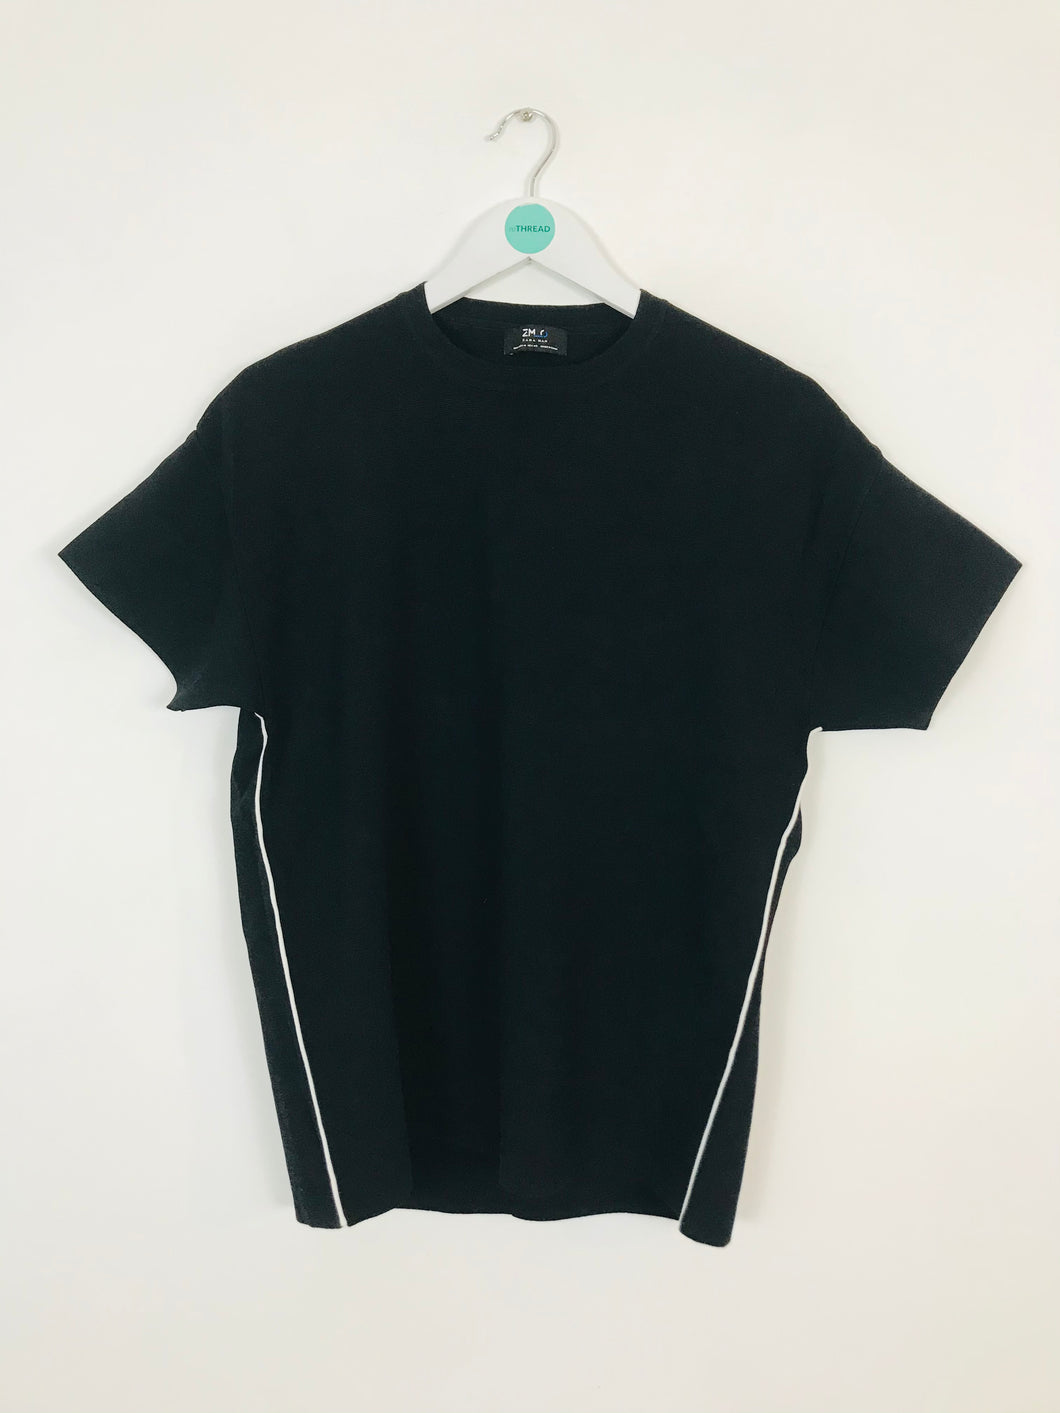 Zara Men’s Short Sleeve Knit Tshirt | M | Black